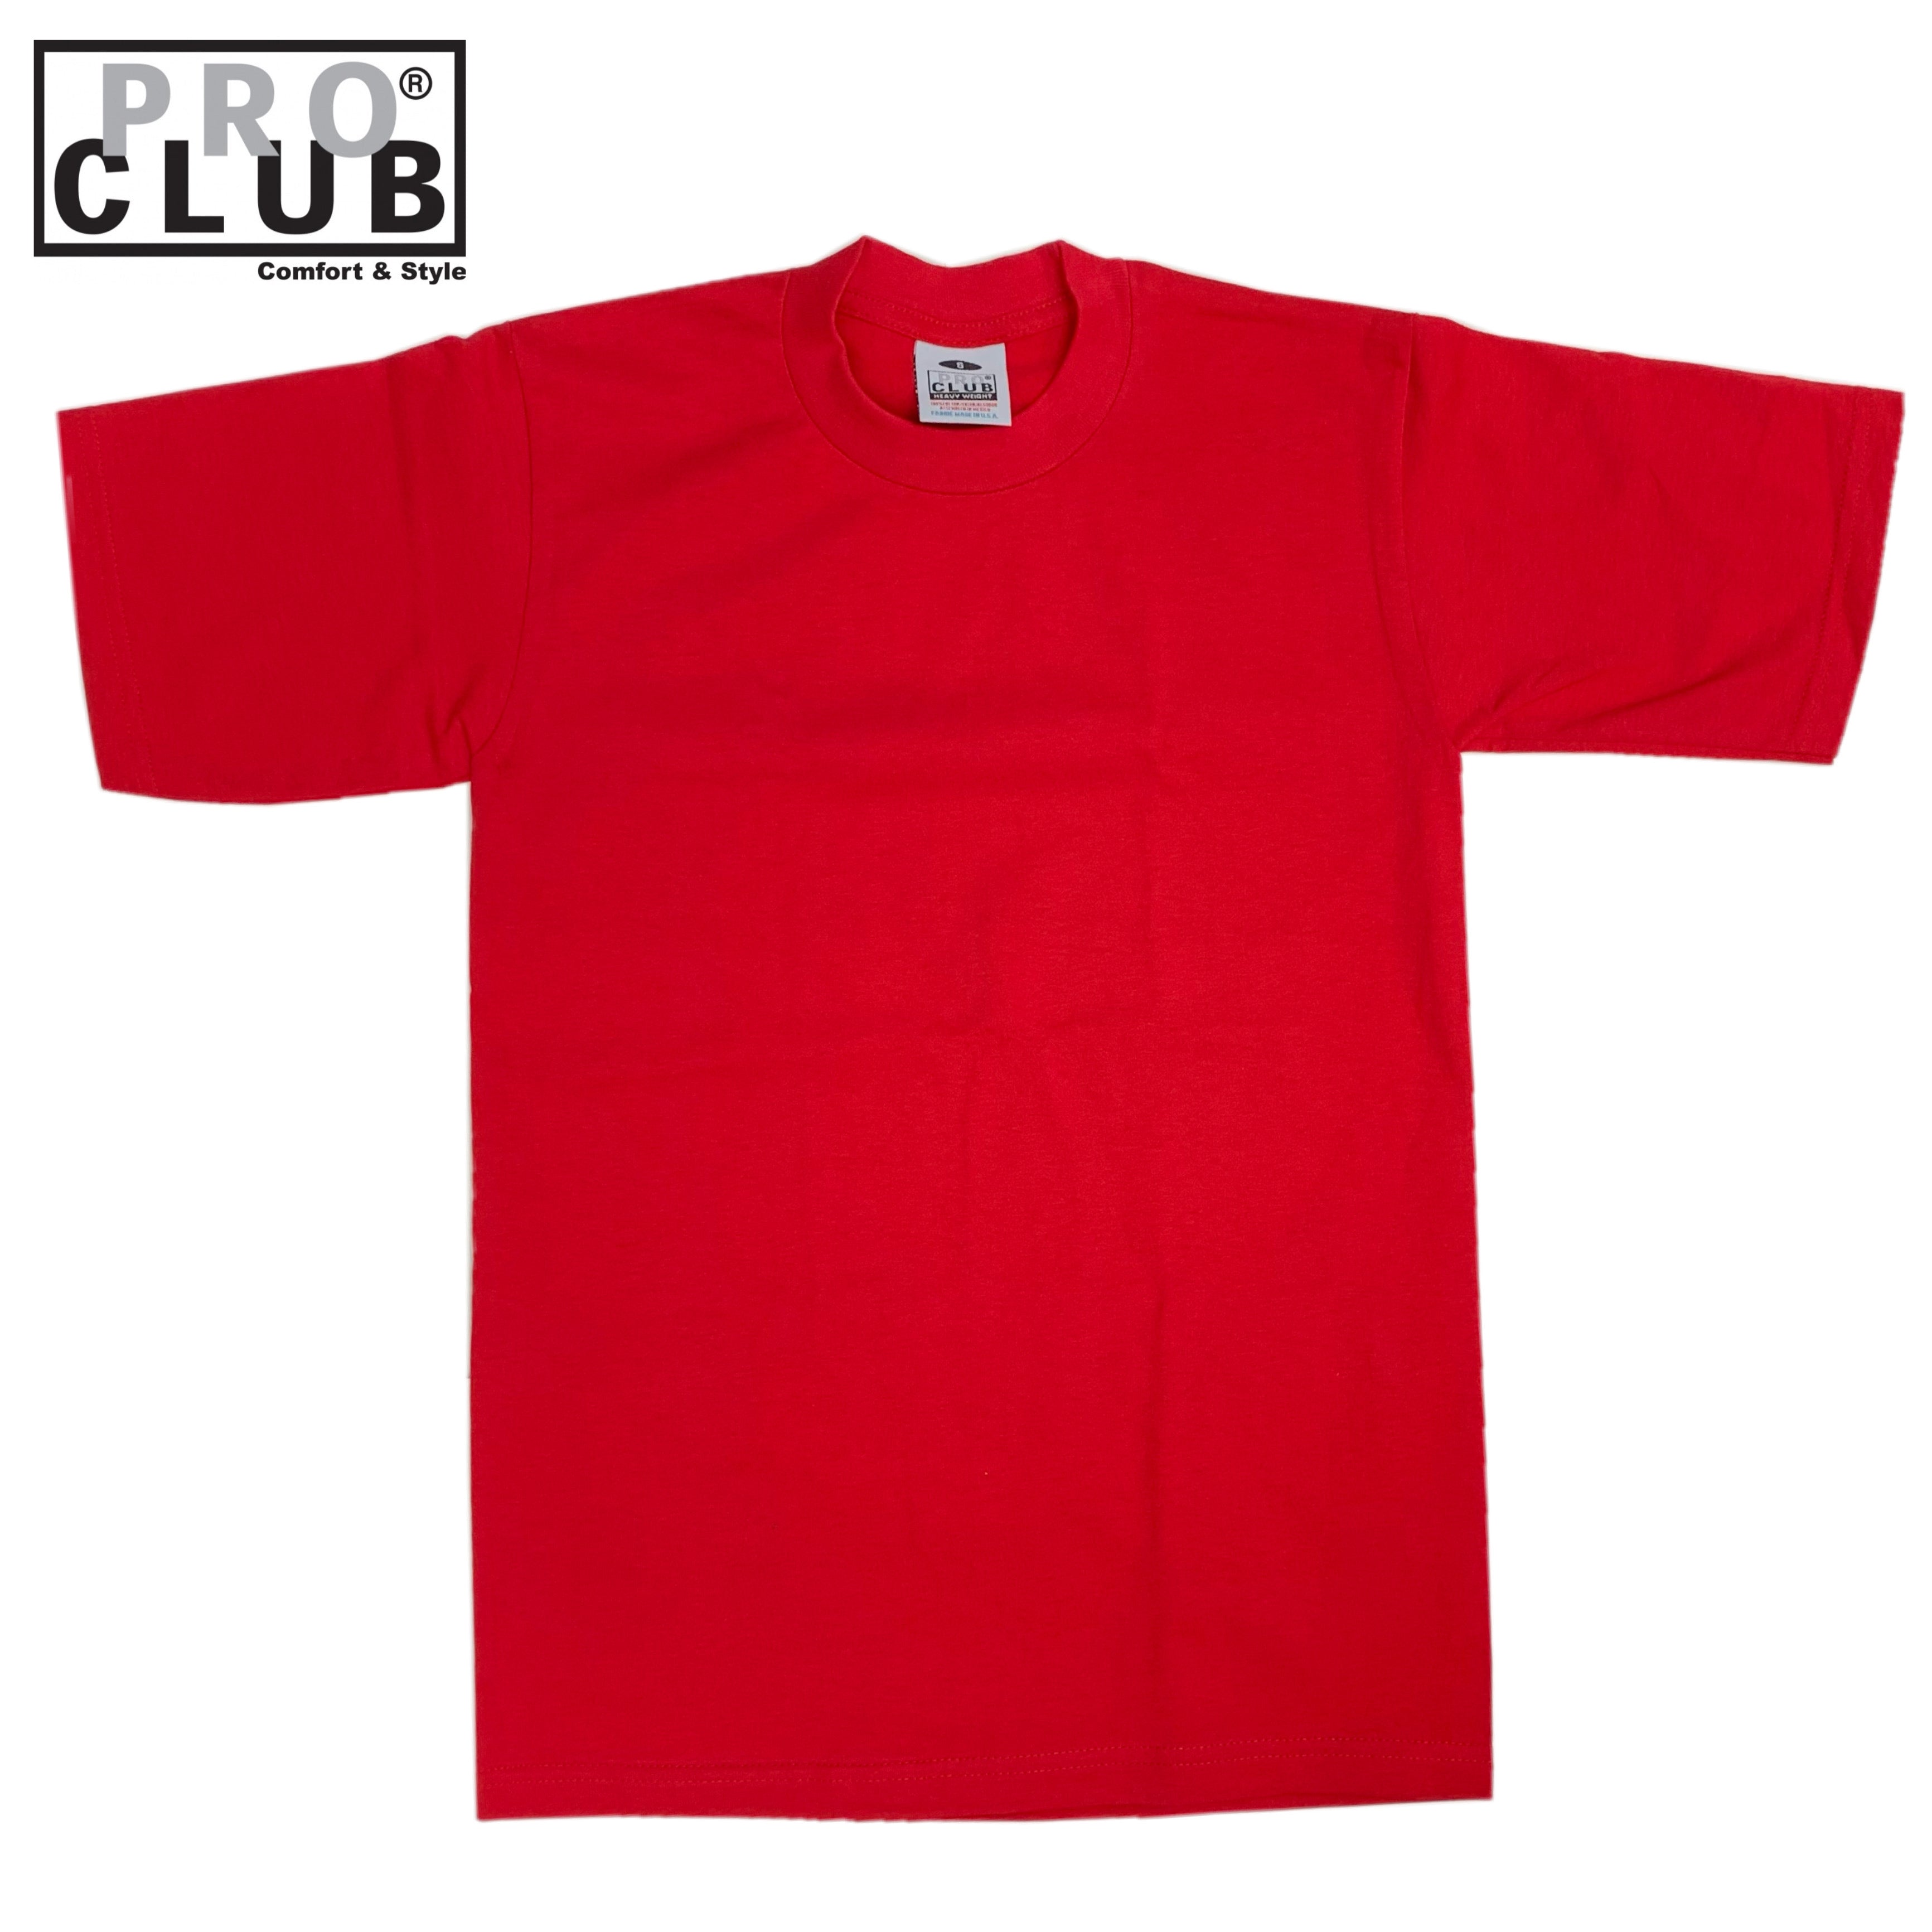 Shop PRO CLUB Unisex Sweat Street Style Plain Cotton Logo by